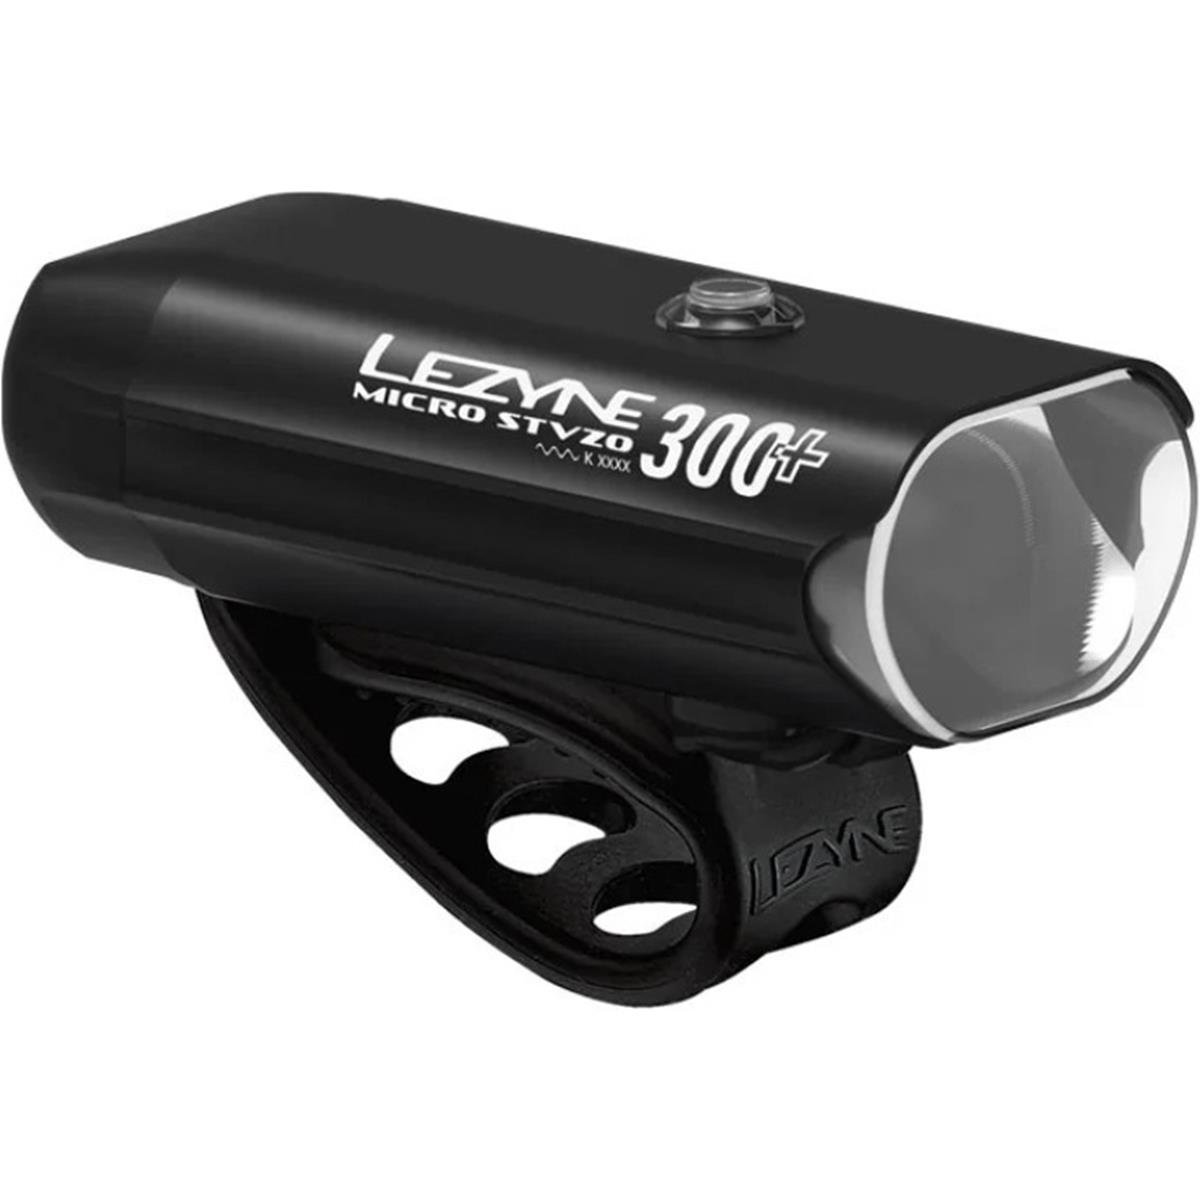 Lezyne Light Micro Drive 300+ 300 Lumen